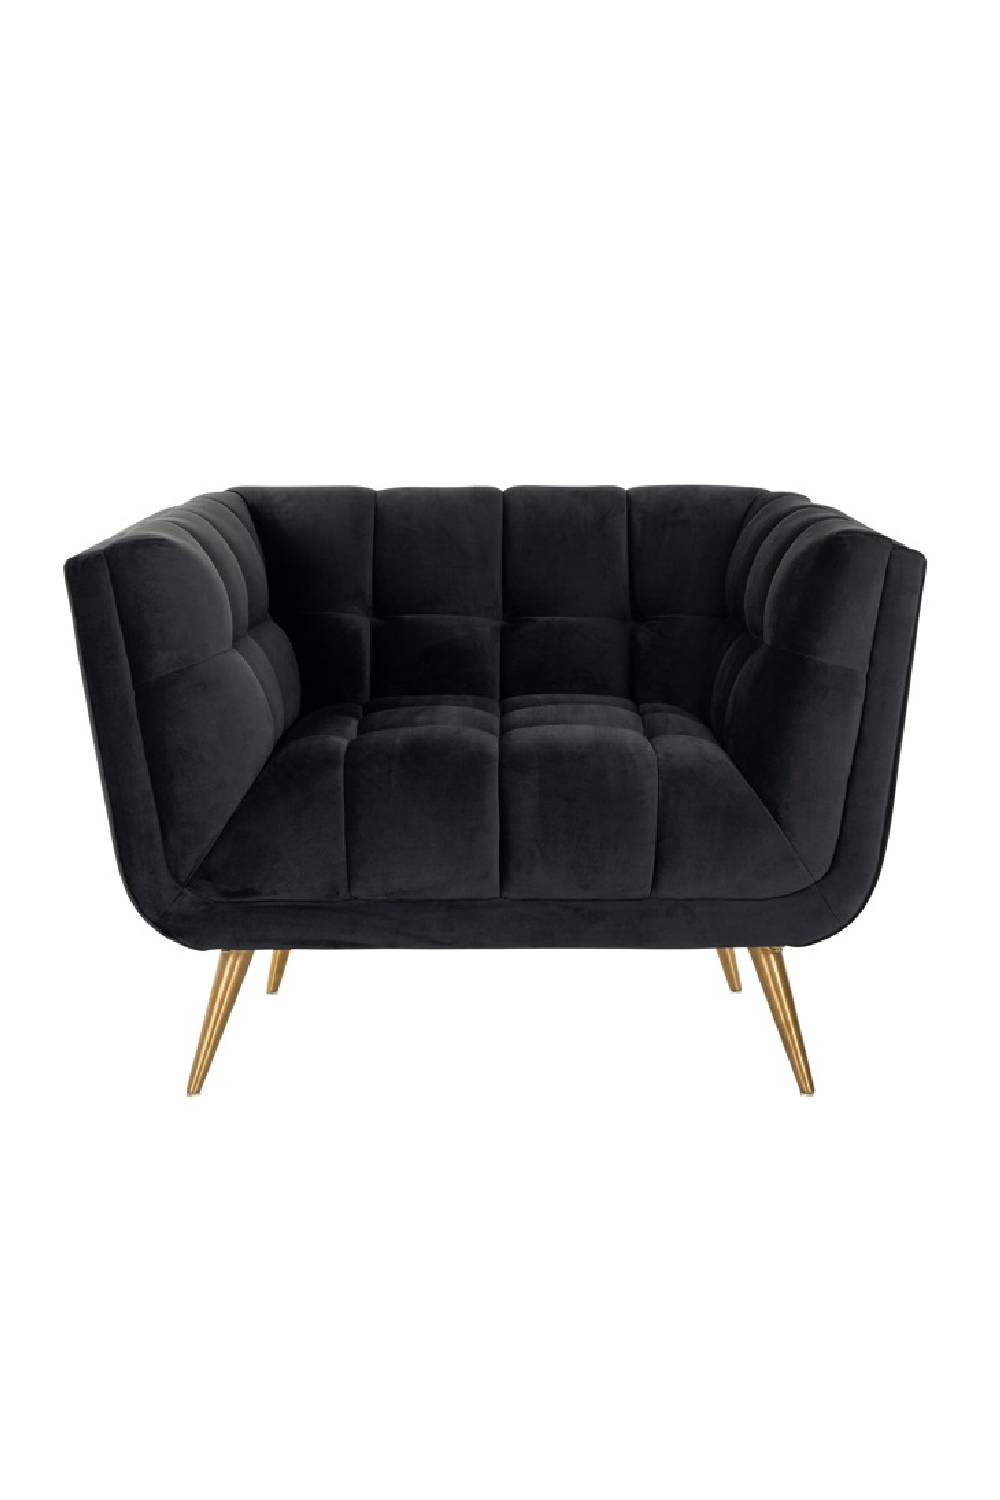 Channel-Tufted Lounge Chair | OROA Huxley | Oroa.com